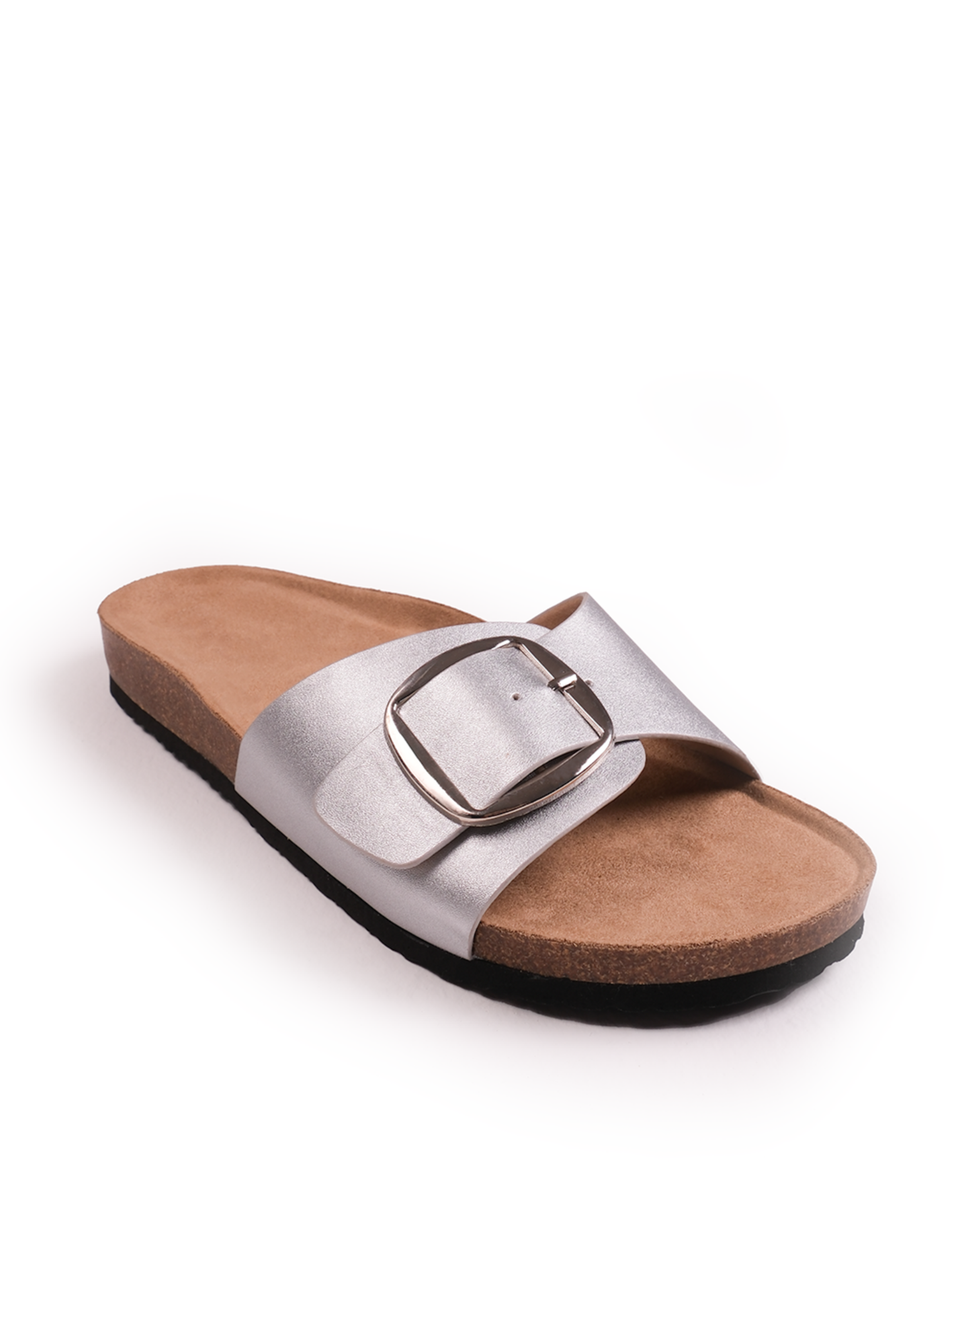 Where's That From Silver Matt Pu Sequoia Flat Sandals